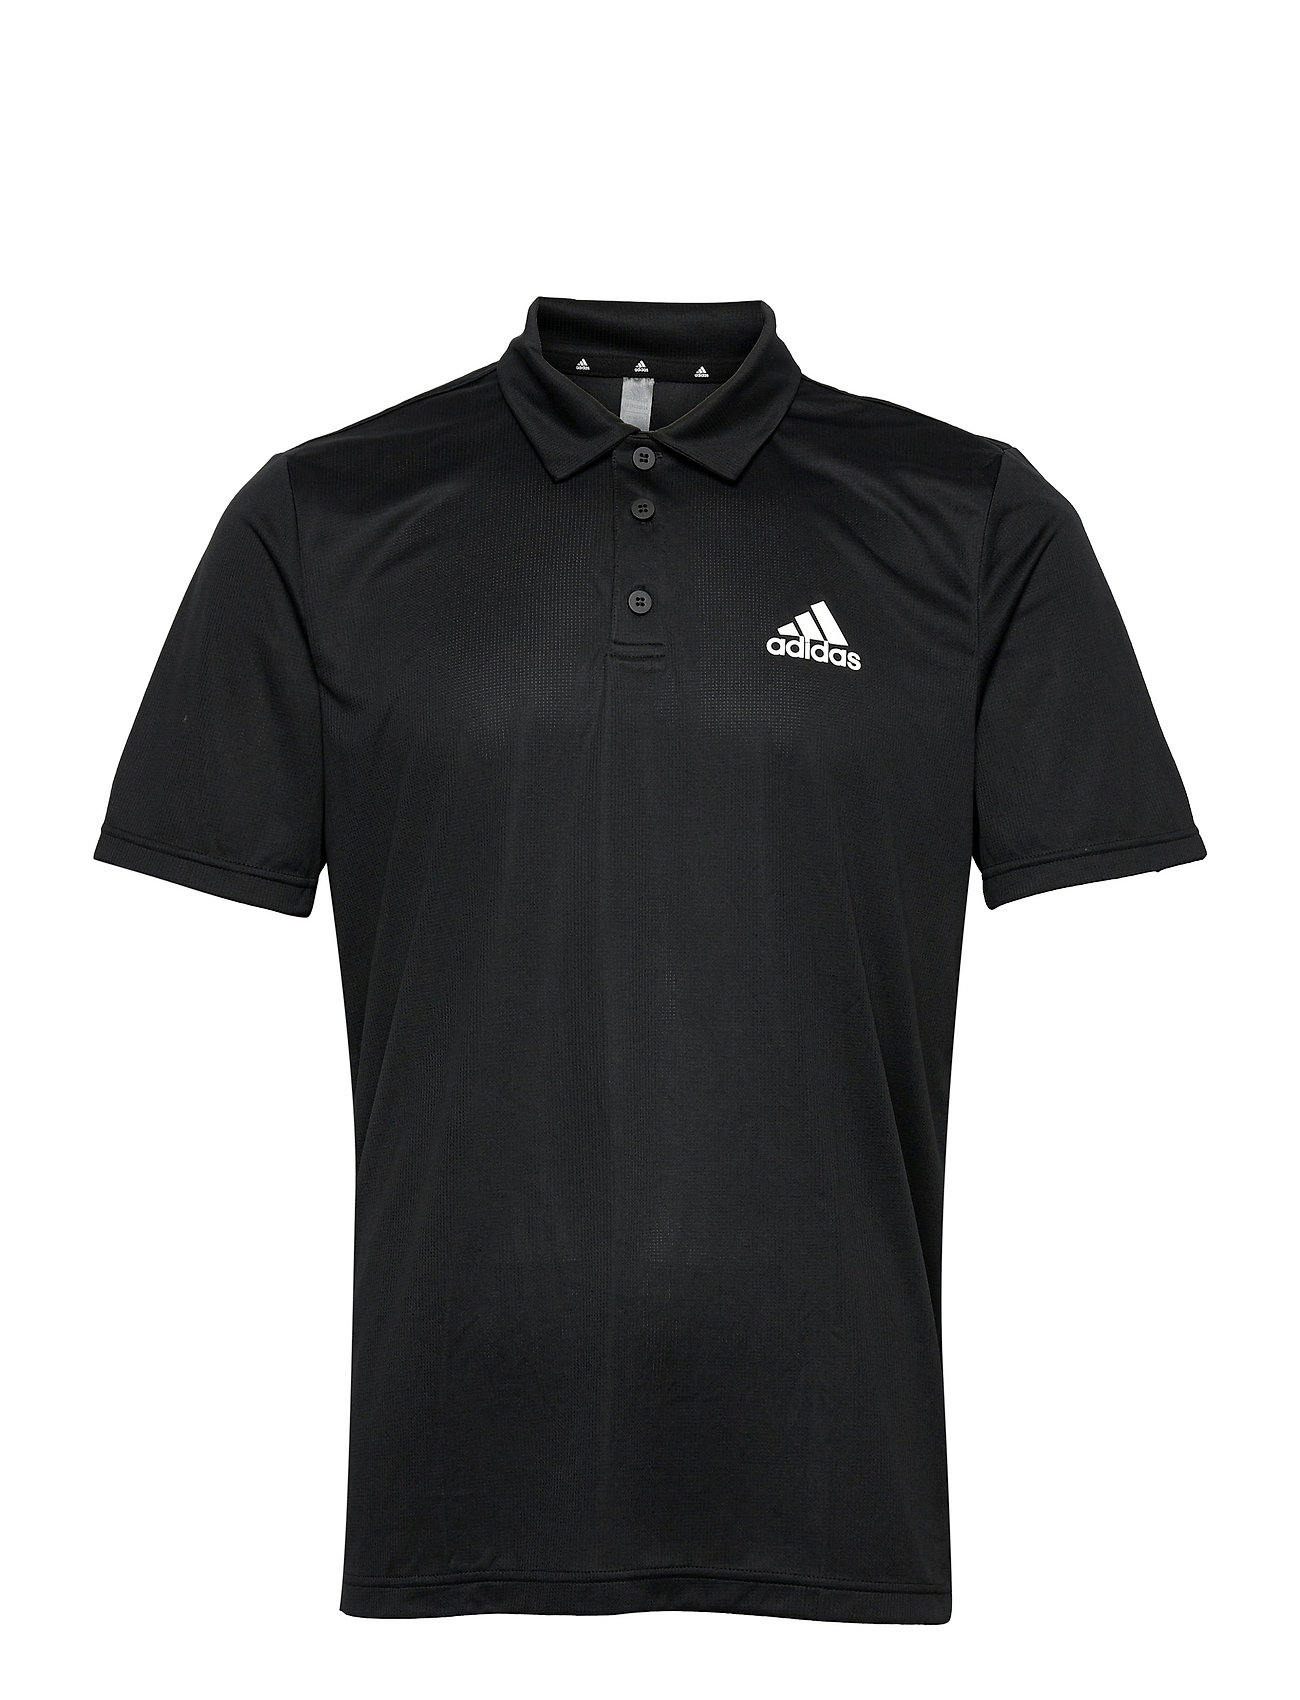 Aeroready Designed To Move Polo Shirt Polos Short-sleeved Musta Adidas Performance, adidas Performance